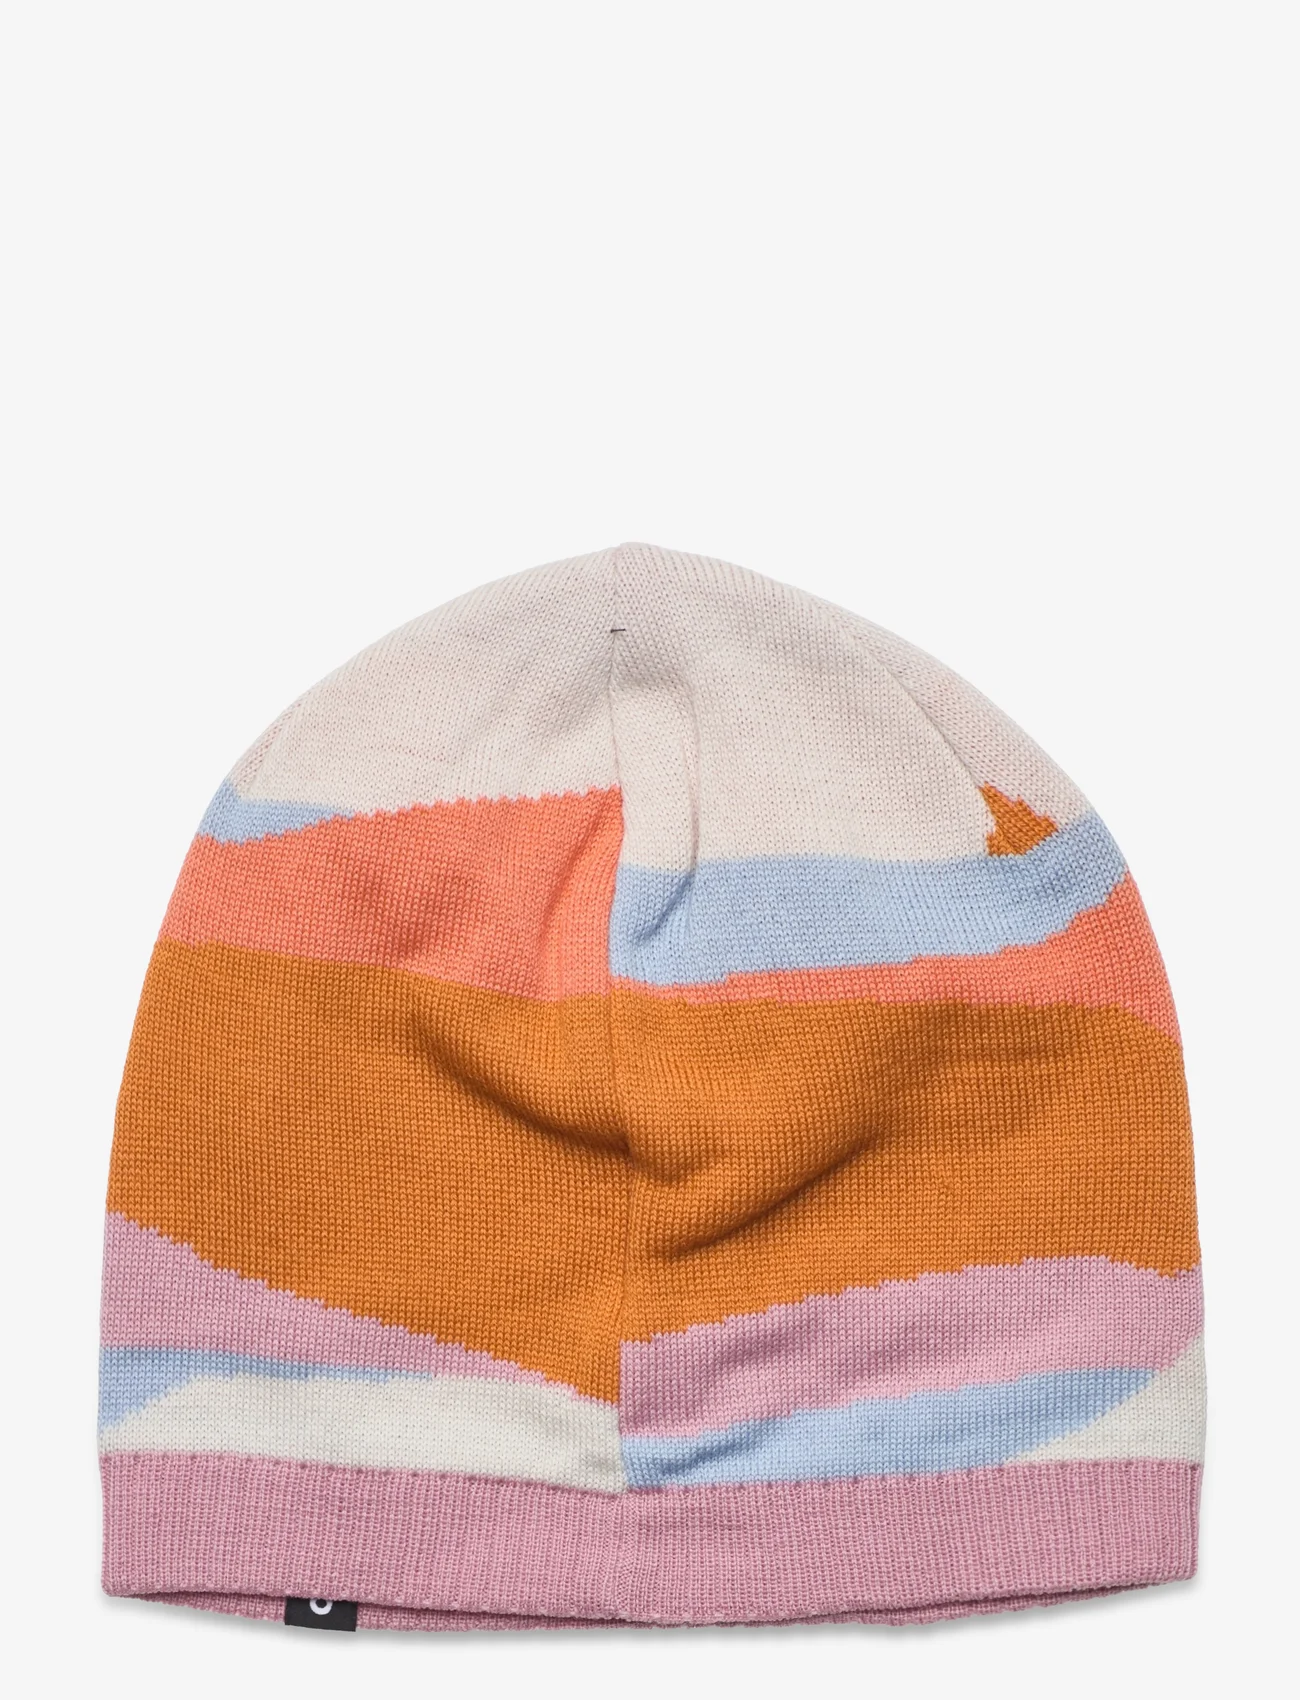 Reima - Beanie, Kuviot - winter hats - cantaloupe orange - 1